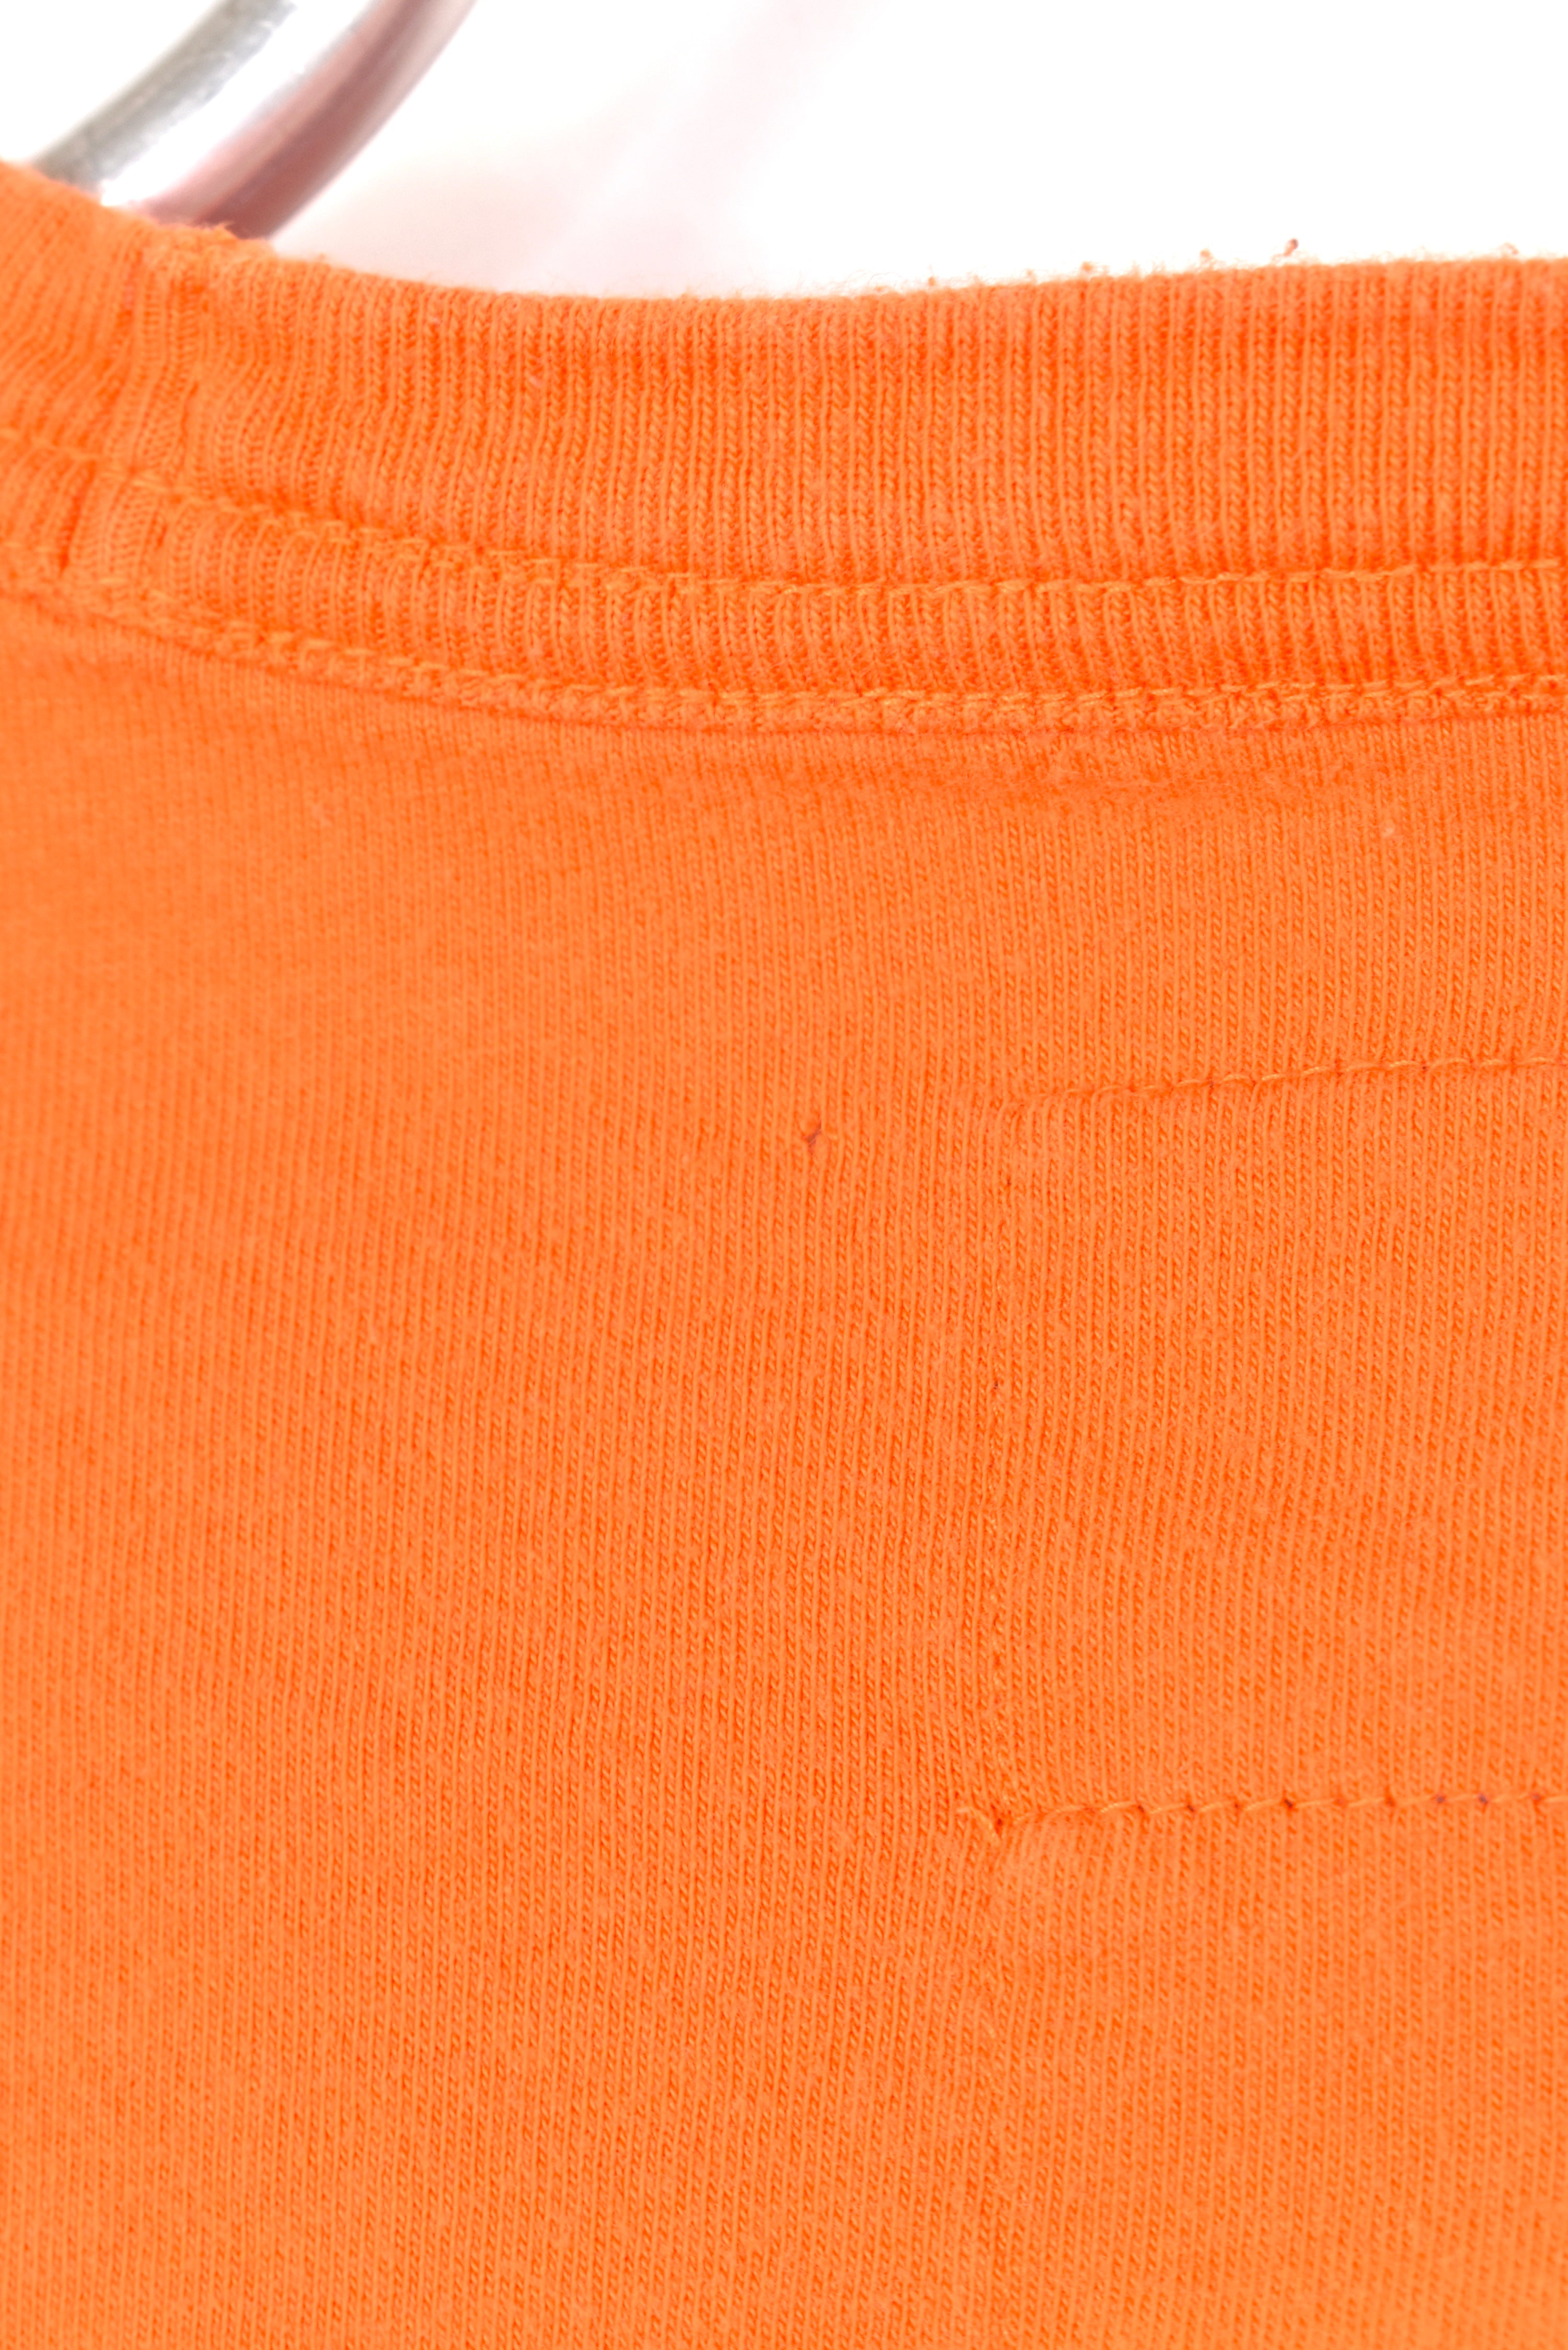 Vintage Miami Dolphins shirt, NFL orange graphic tee - AU XL PRO SPORT